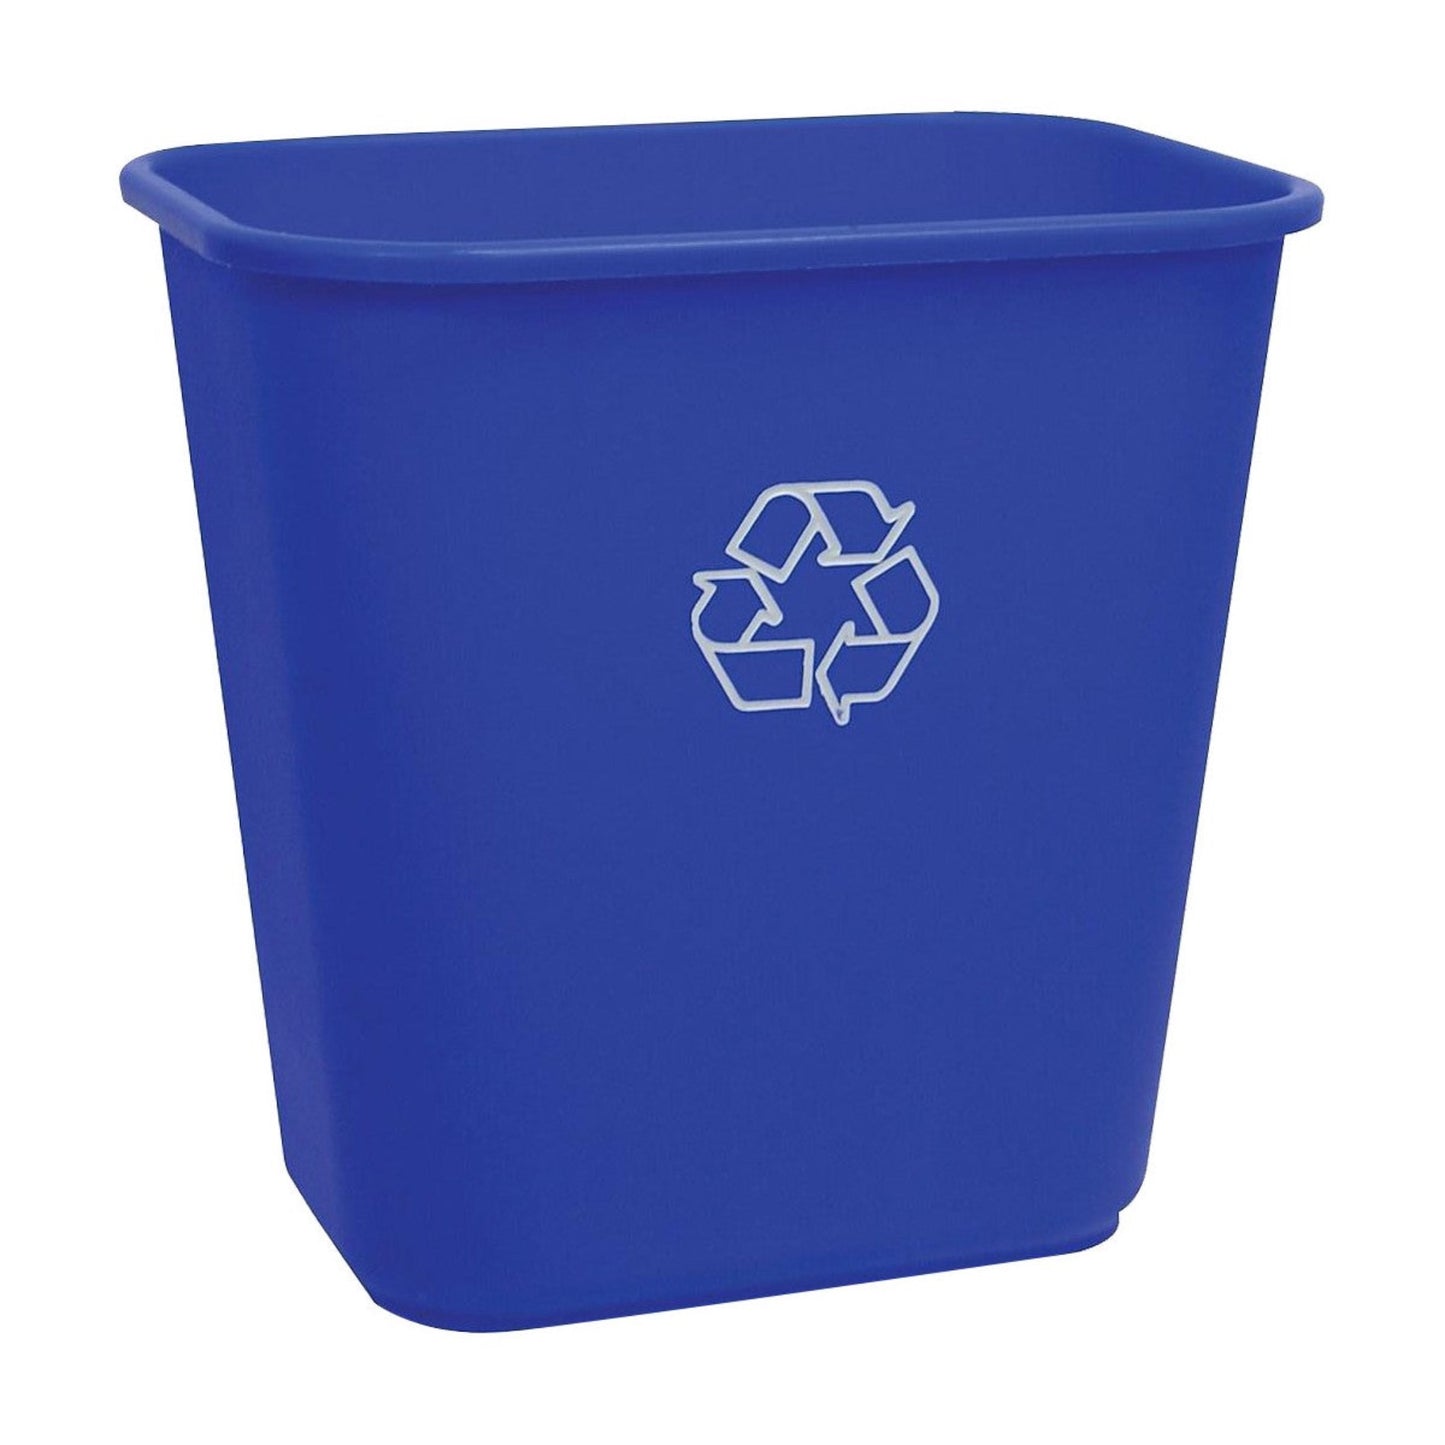 Recycling bin - 26 L (5.7 gal) capacity - lightweight - Blue